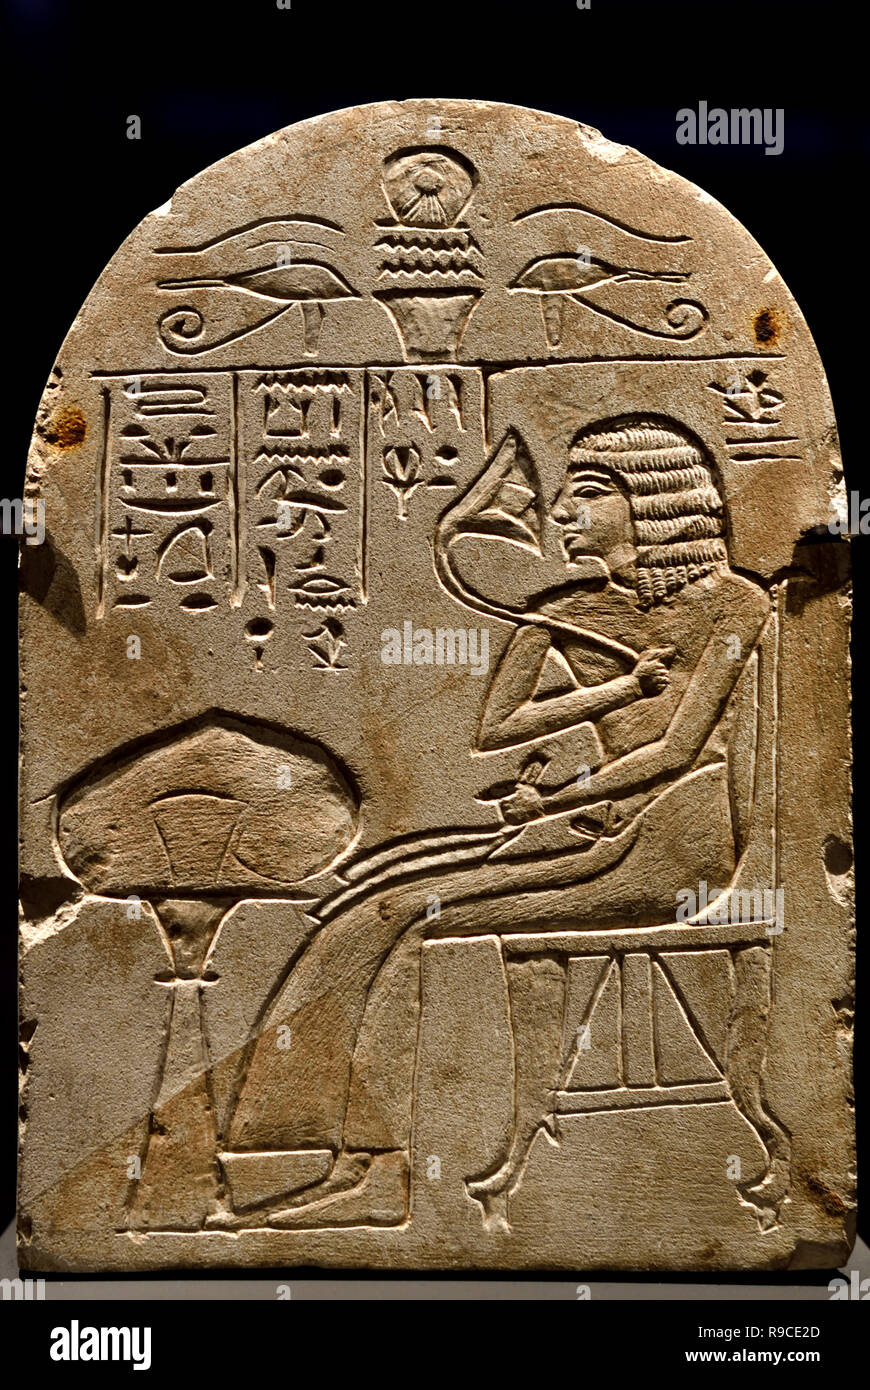 La utile qui se Merysachmet de Deir el Medina xixe dynastie (1292-1191 avant J.-C.) L'Égypte, l'Égyptien. Banque D'Images